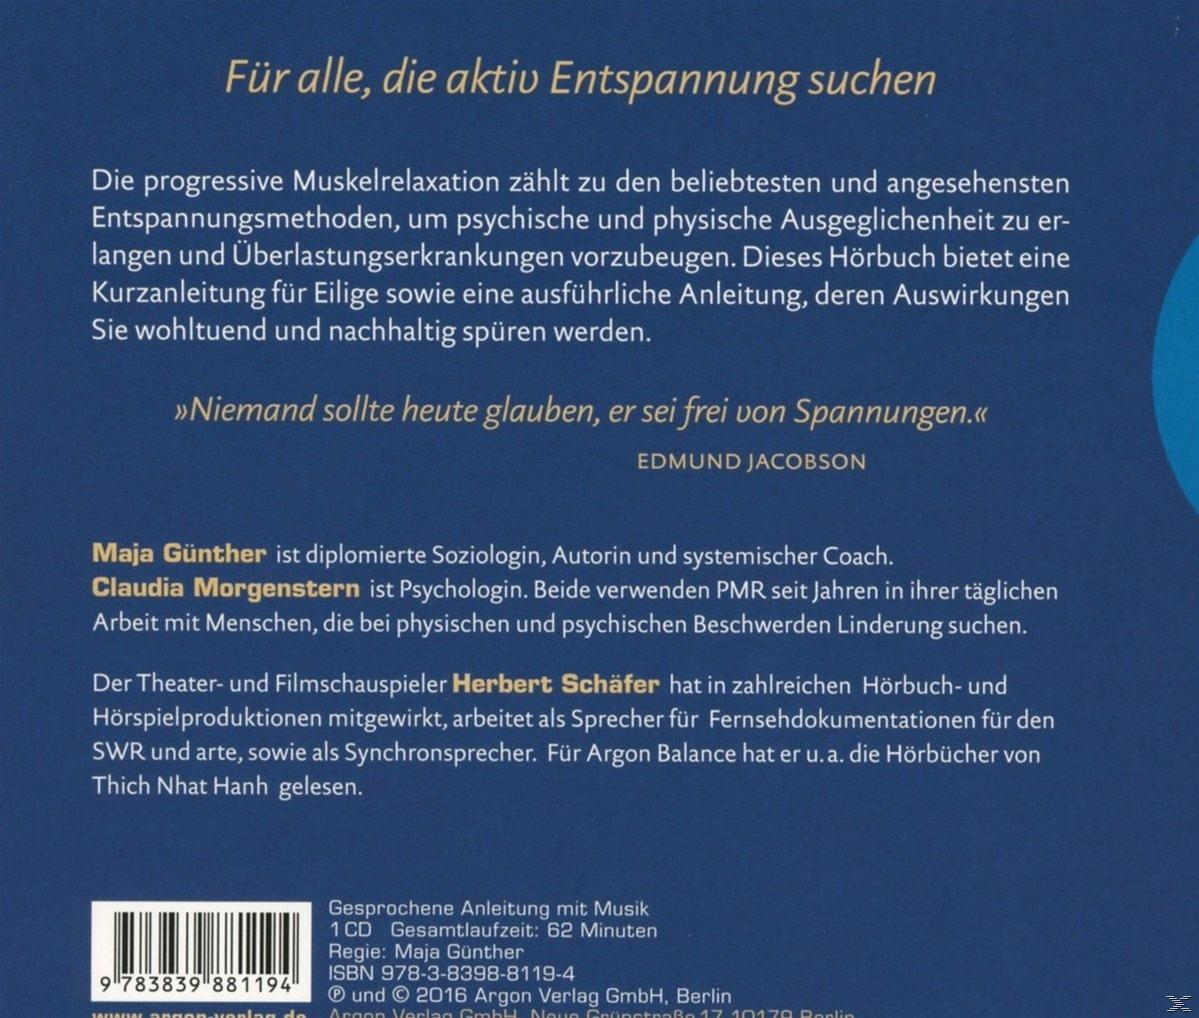 - (CD) Muskelrelaxation Schäfer - Progressive Herbert